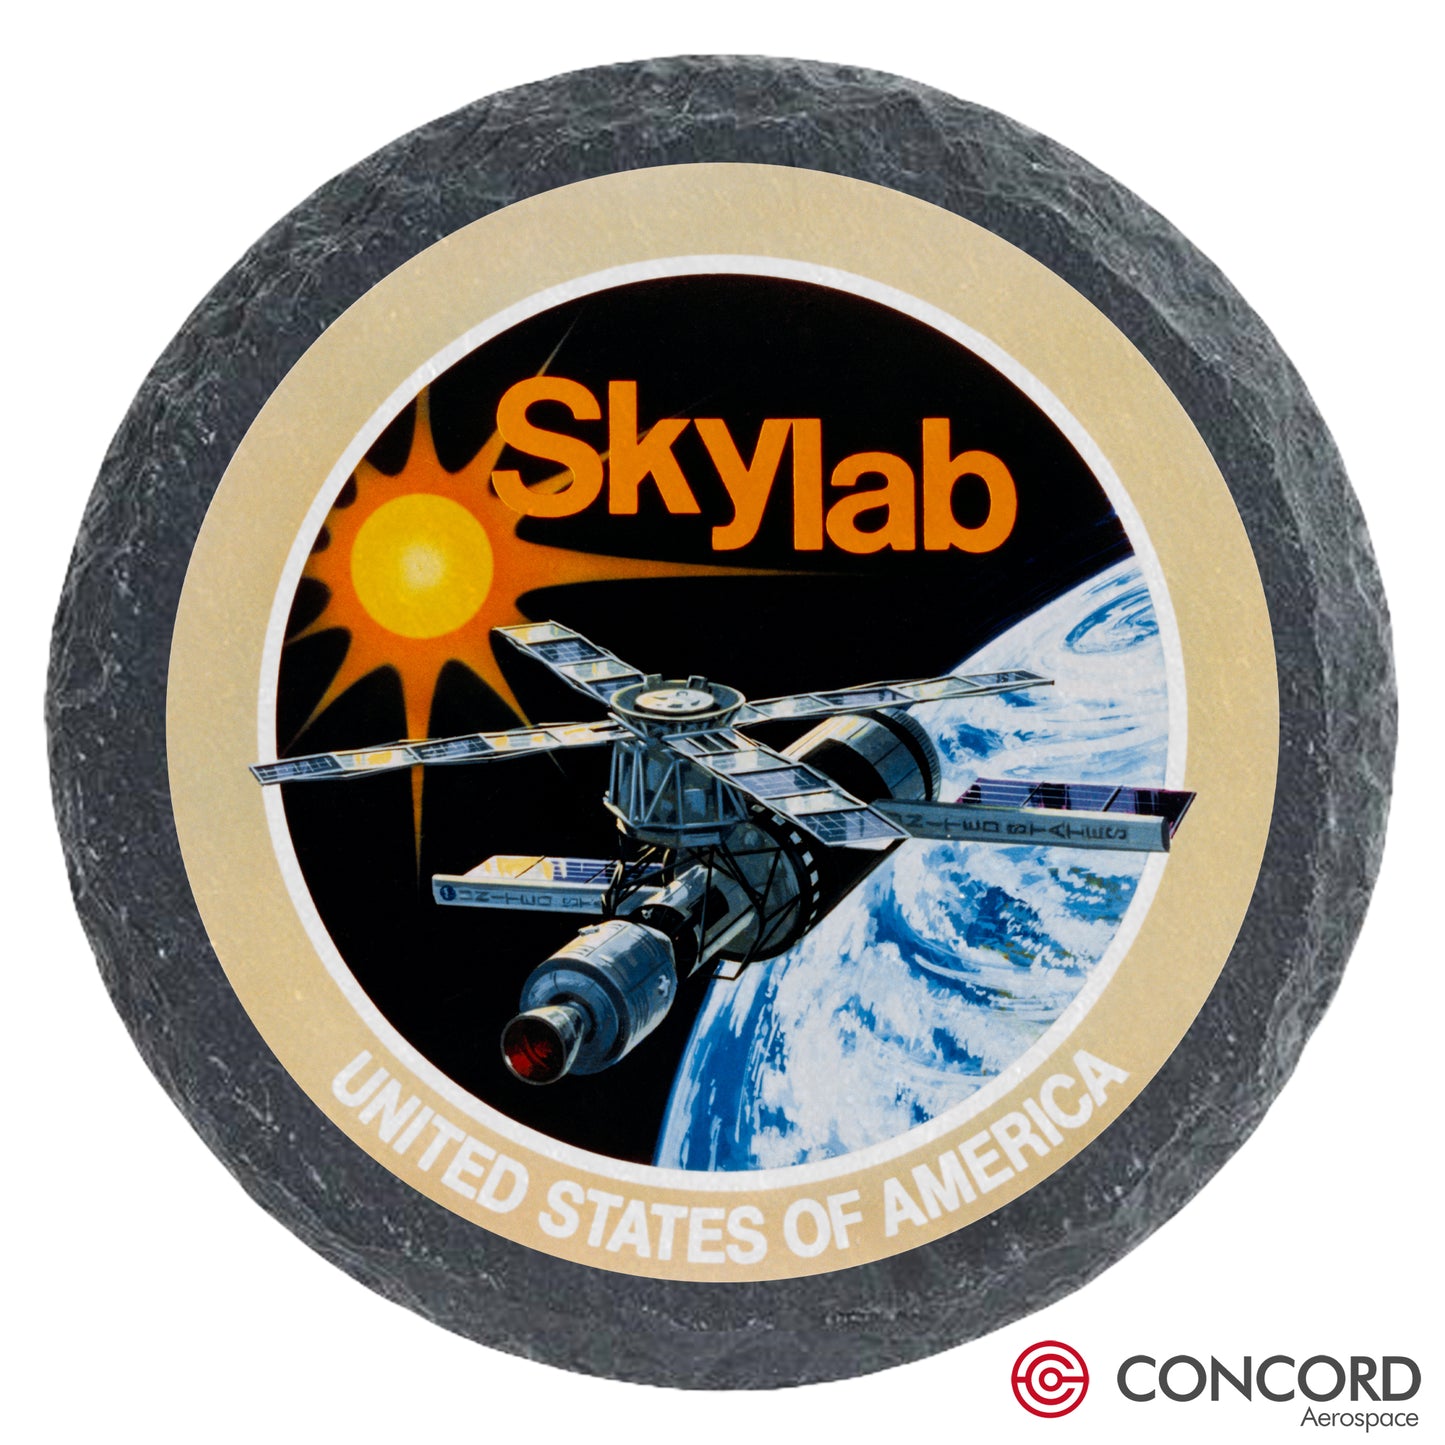 SKYLAB PROGRAM - SLATE COASTER - Concord Aerospace Concord Aerospace Concord Aerospace Coasters